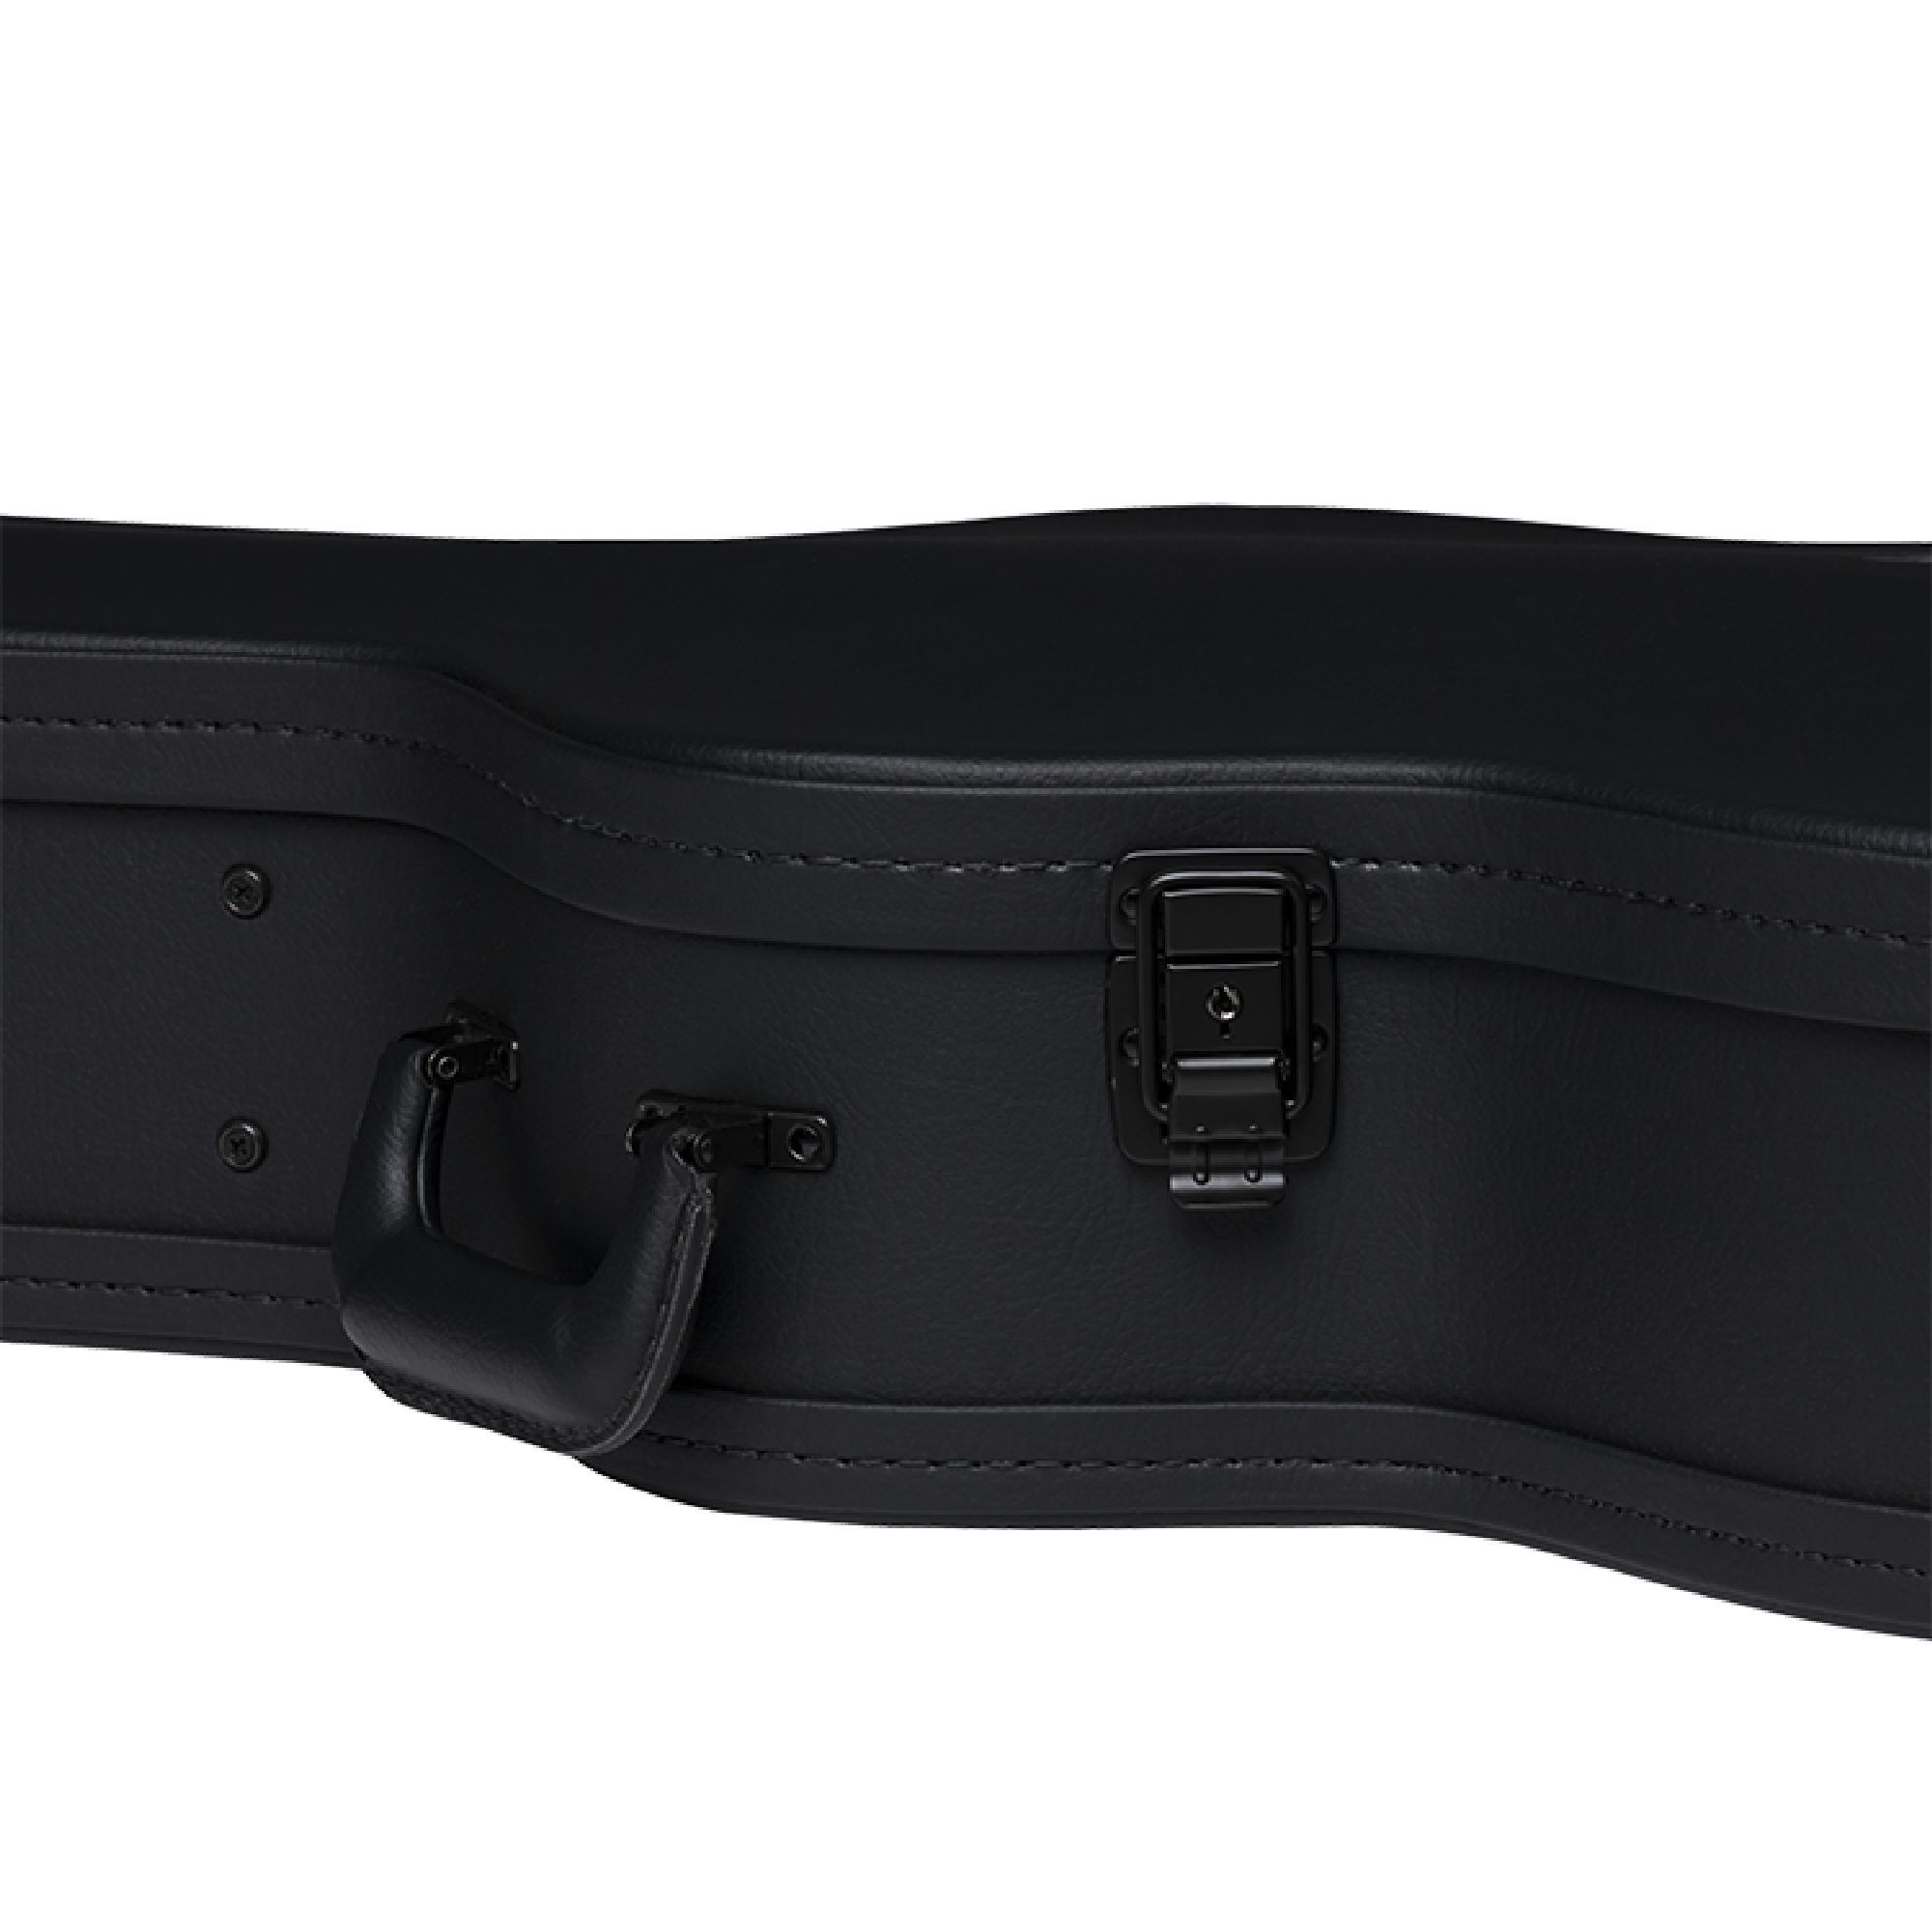 Gibson Small-Body Acoustic Modern Hardshell Case Black Чехлы и кейсы для акустических гитар